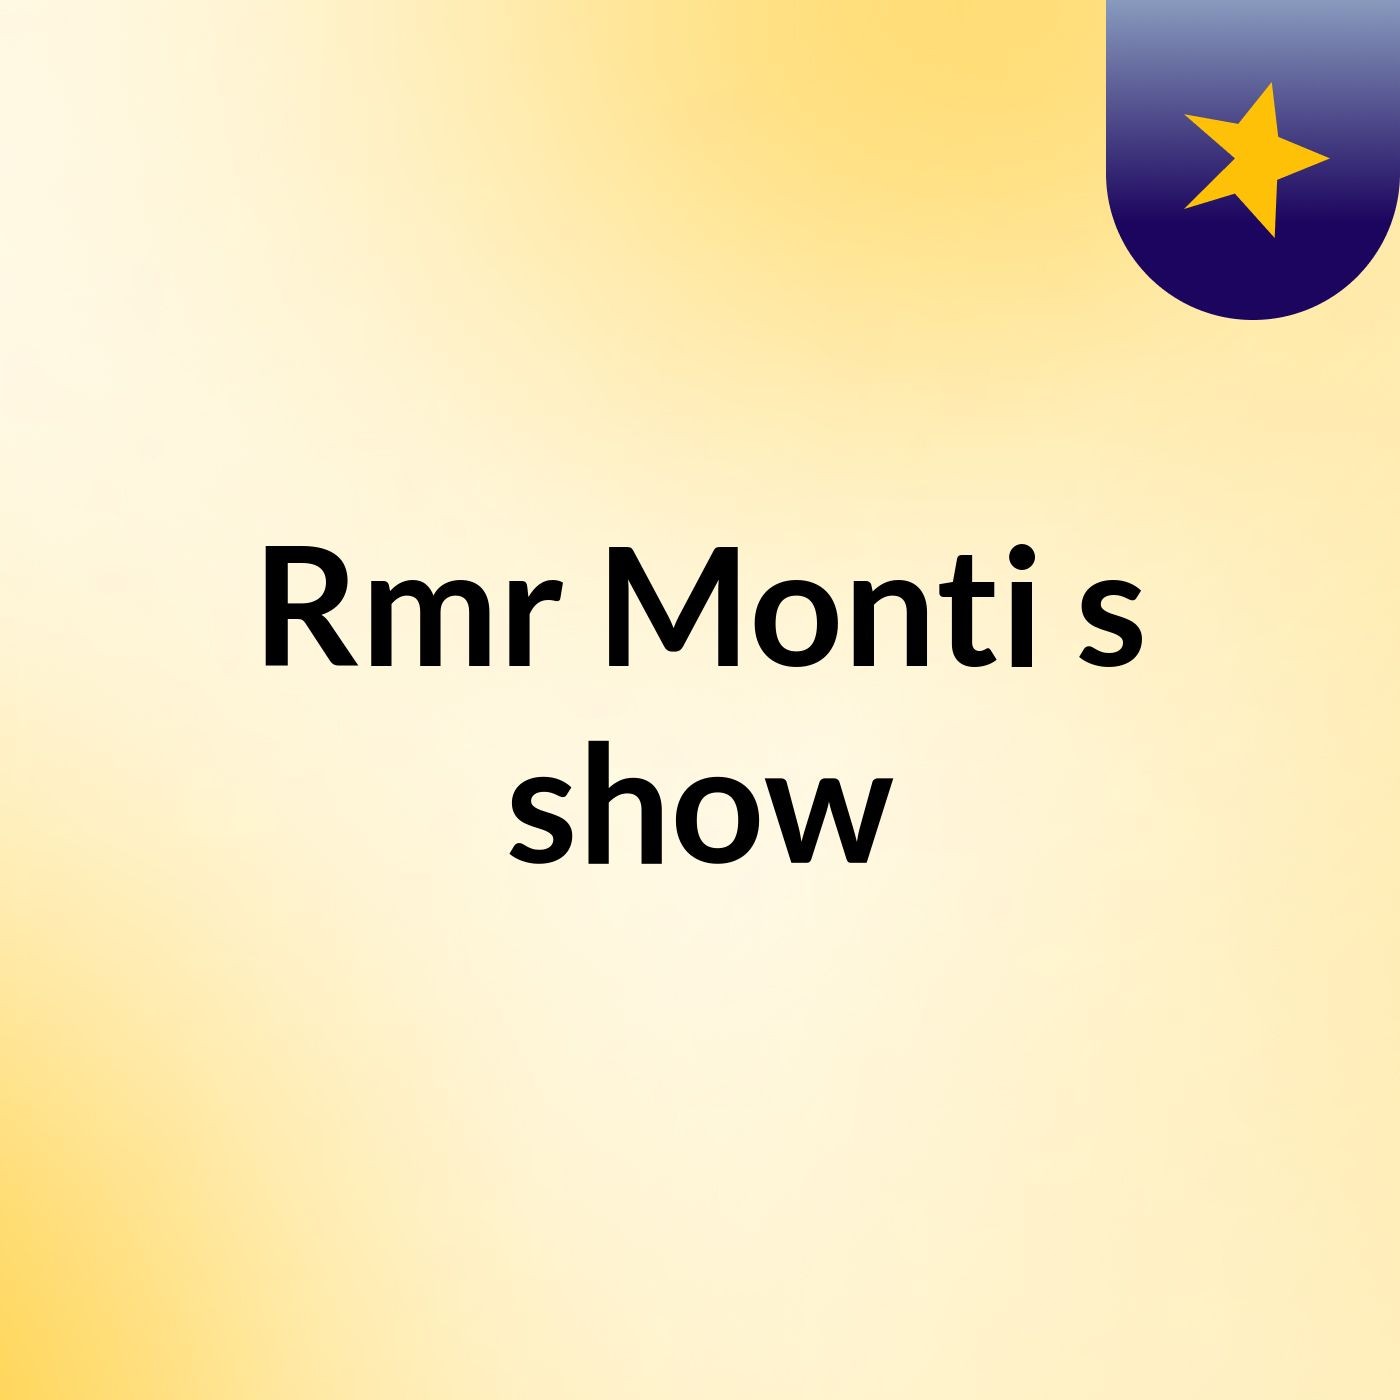 Rmr Monti's show